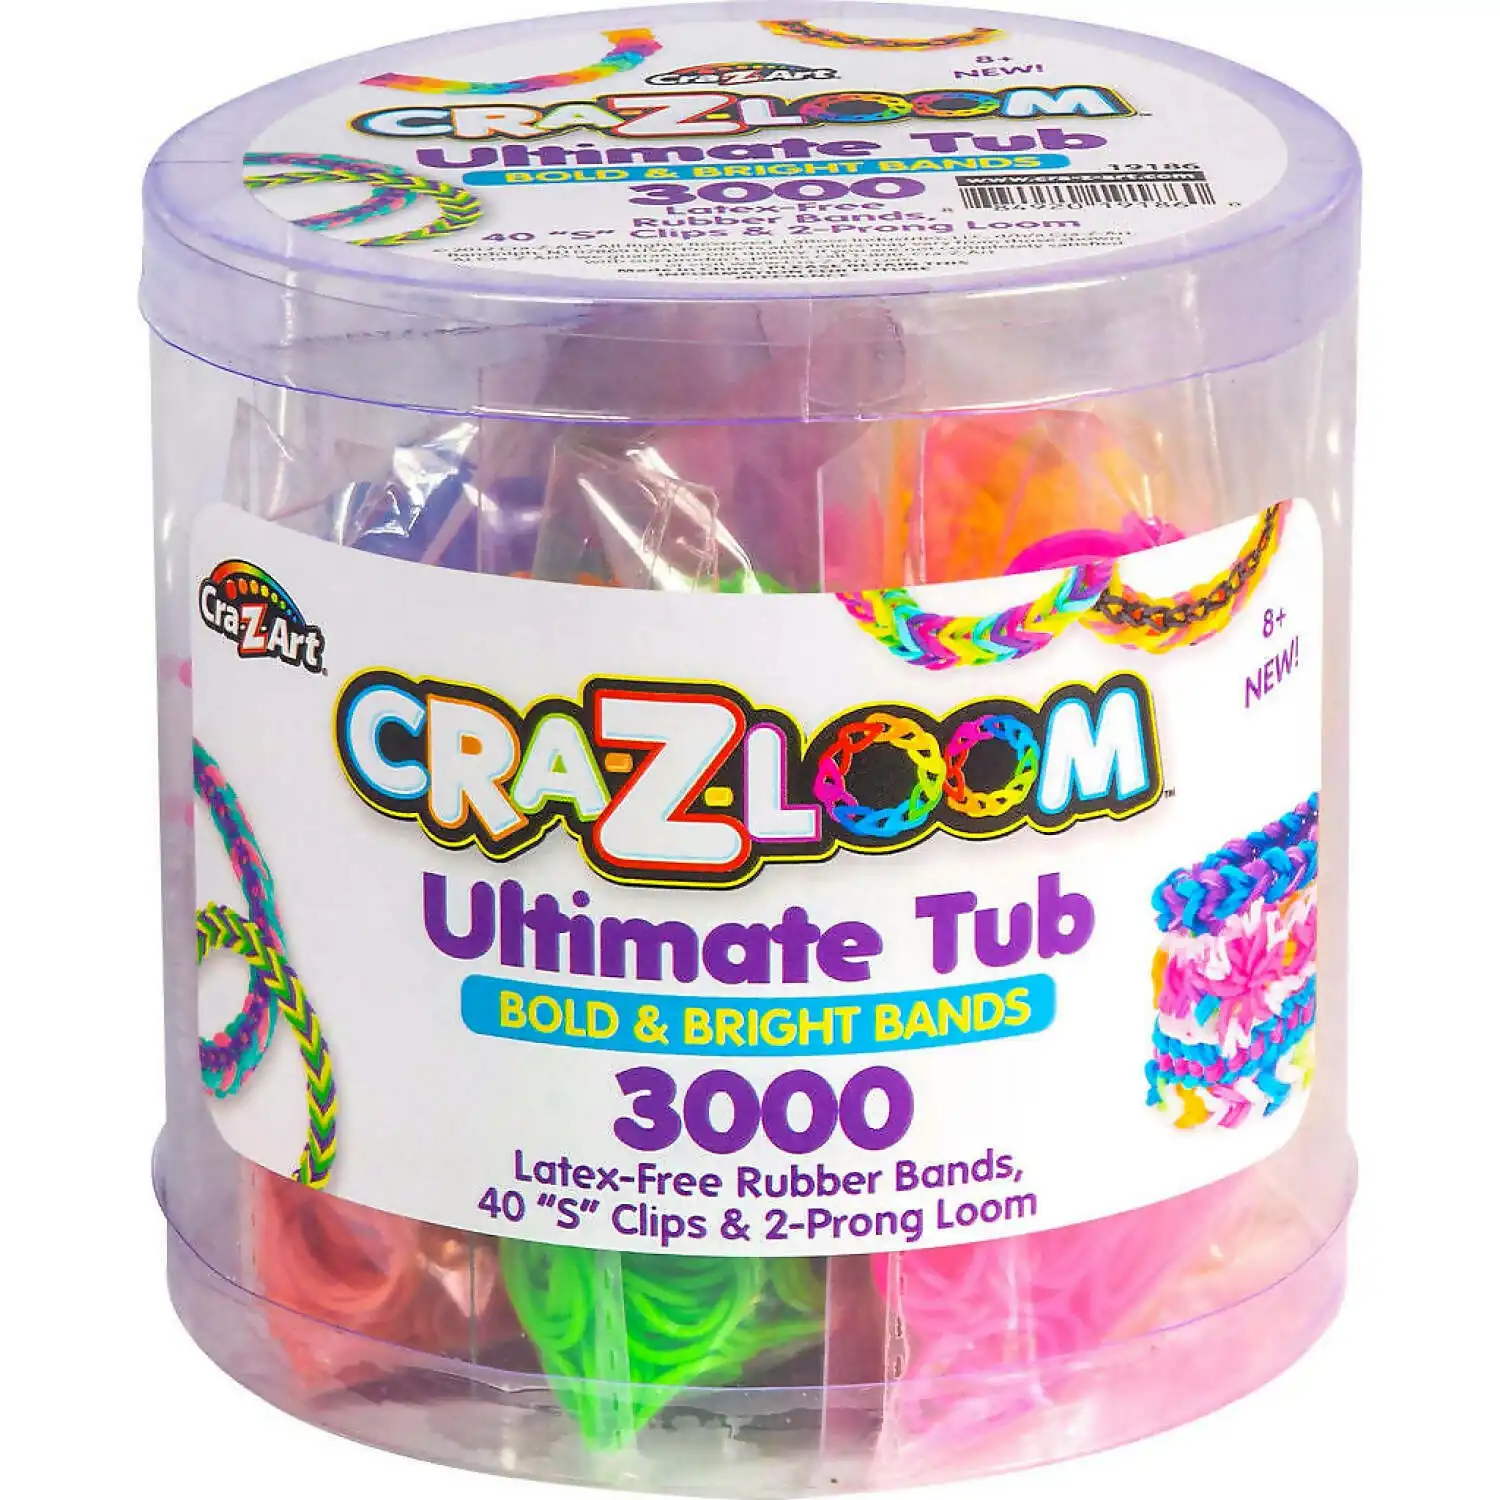 CRA-Z-ART - Cra-z-loom Ultimate Tub 3000 Bold & Bright Bands